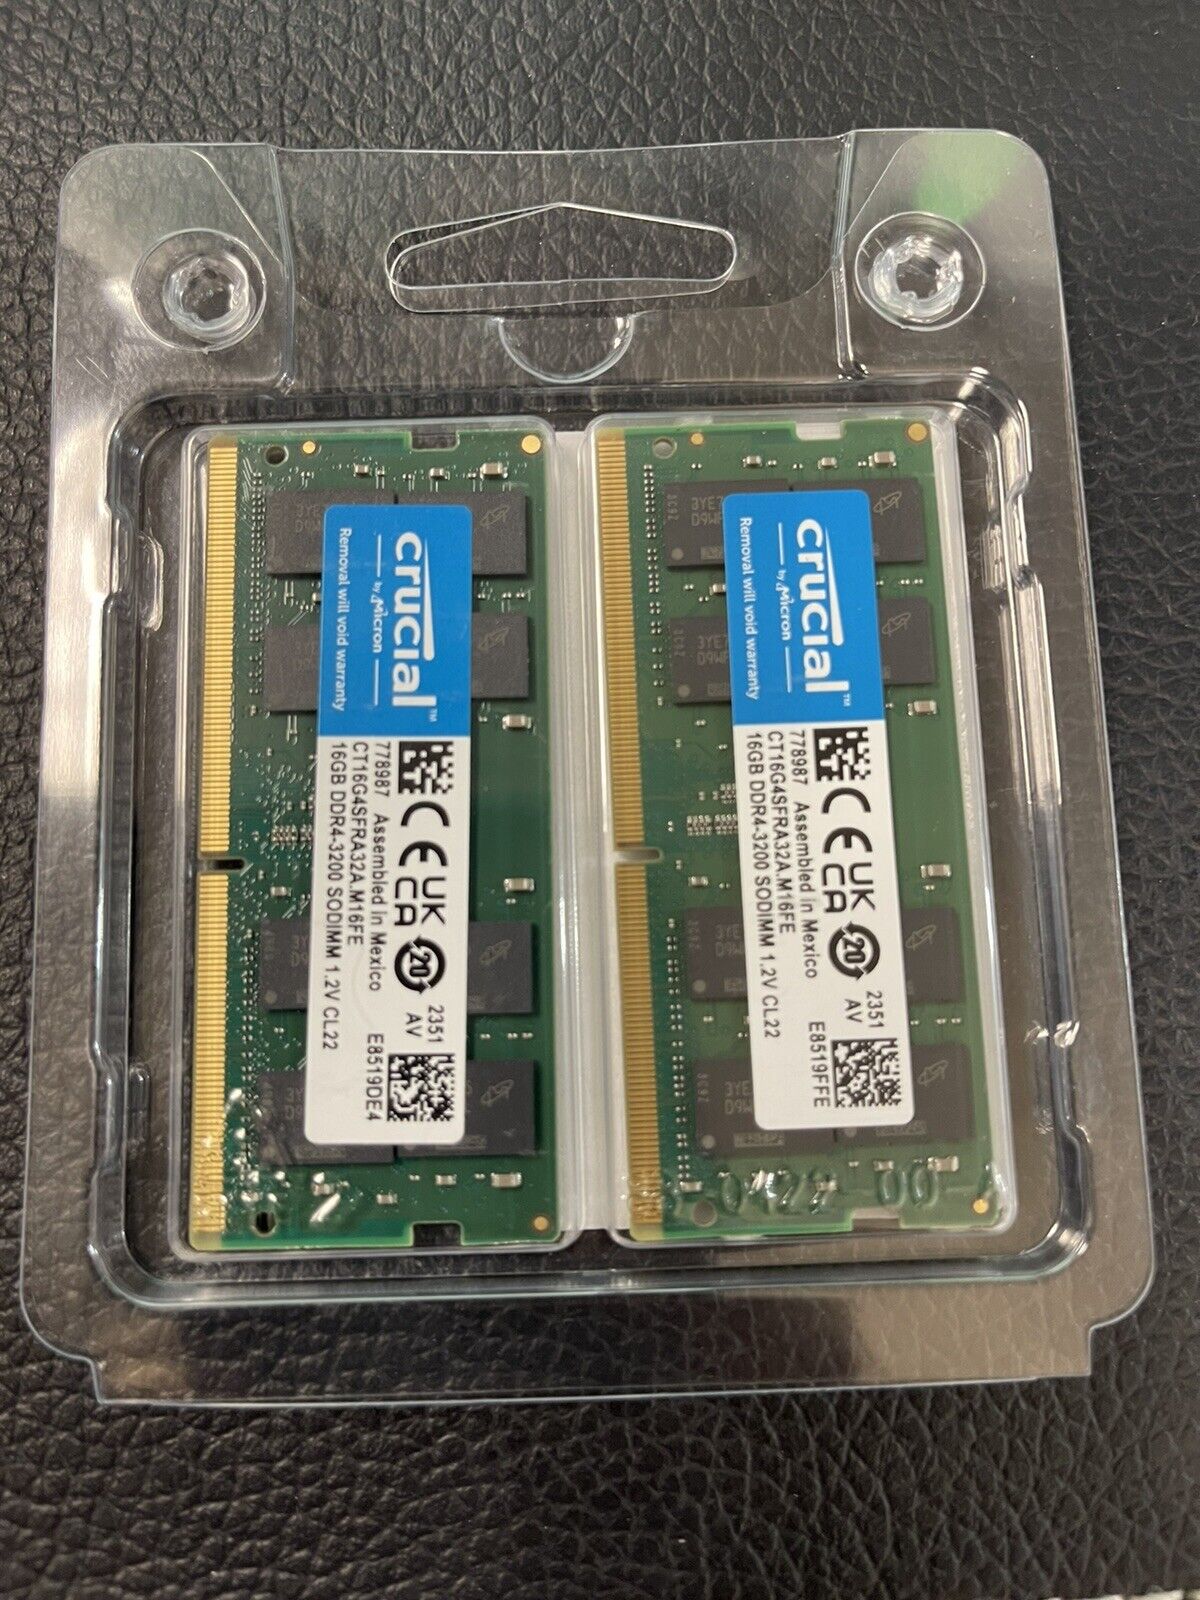 32GB (2x16GB) DDR4 3200MHz SODIMM CT2K16G4SFRA32A  RAM Memory Modules